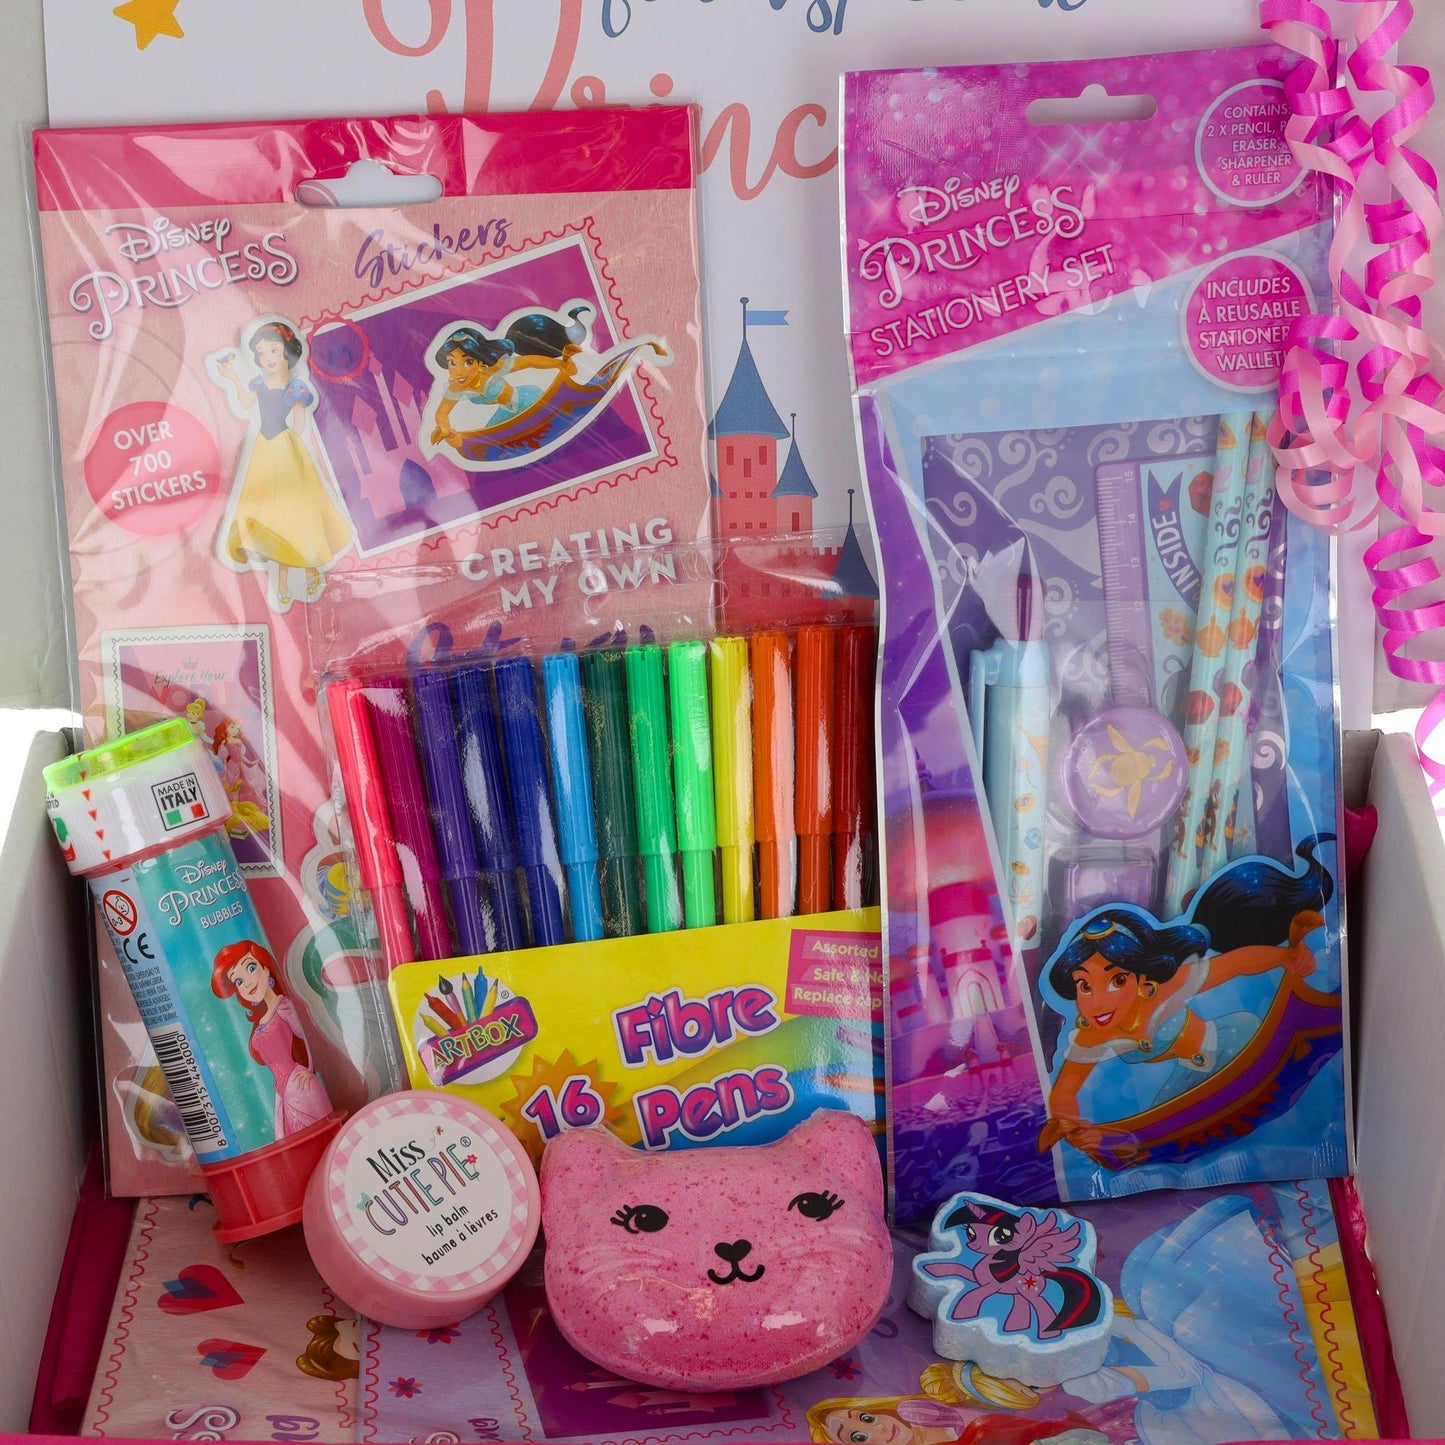 Princess Children's Activity & Bath Time Gift Box  - Always Looking Good - Large Set  